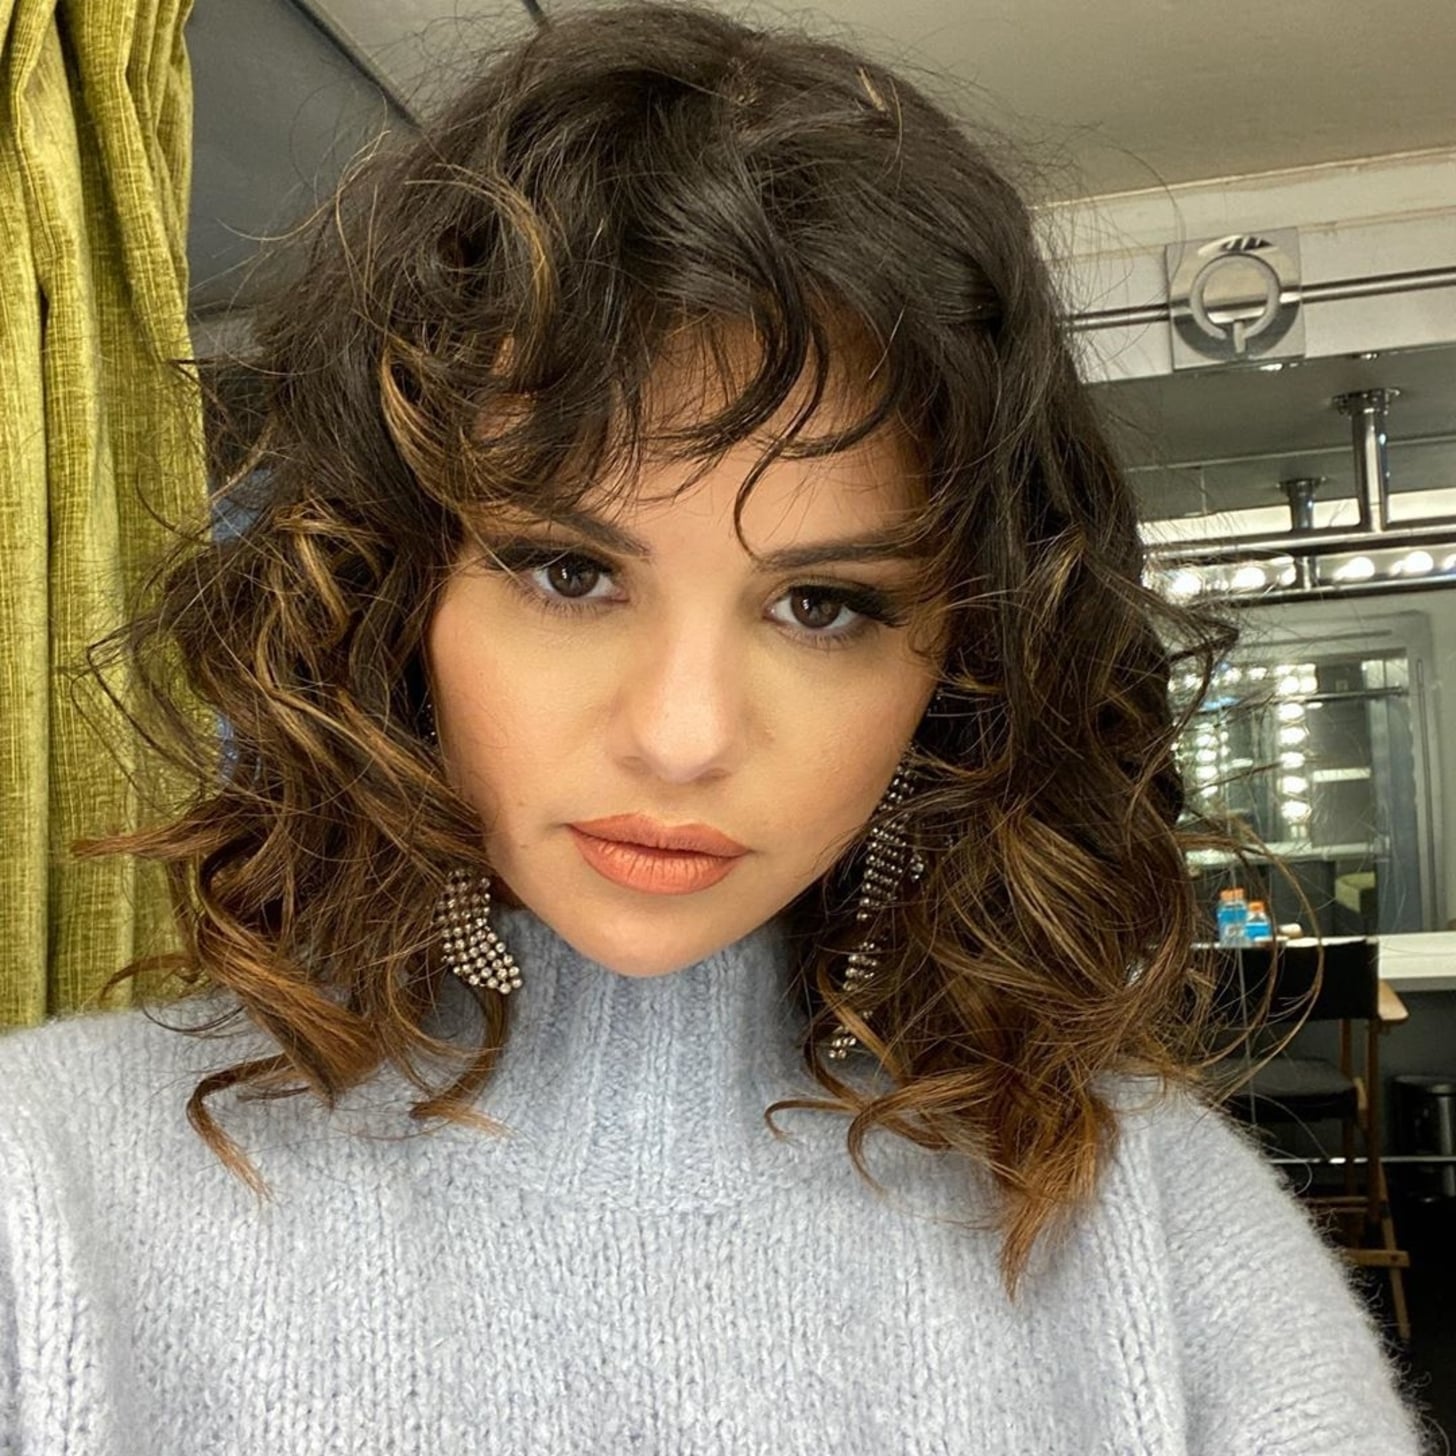 Selena Gomez Hair - Meaning Behind New Bangs Self Care